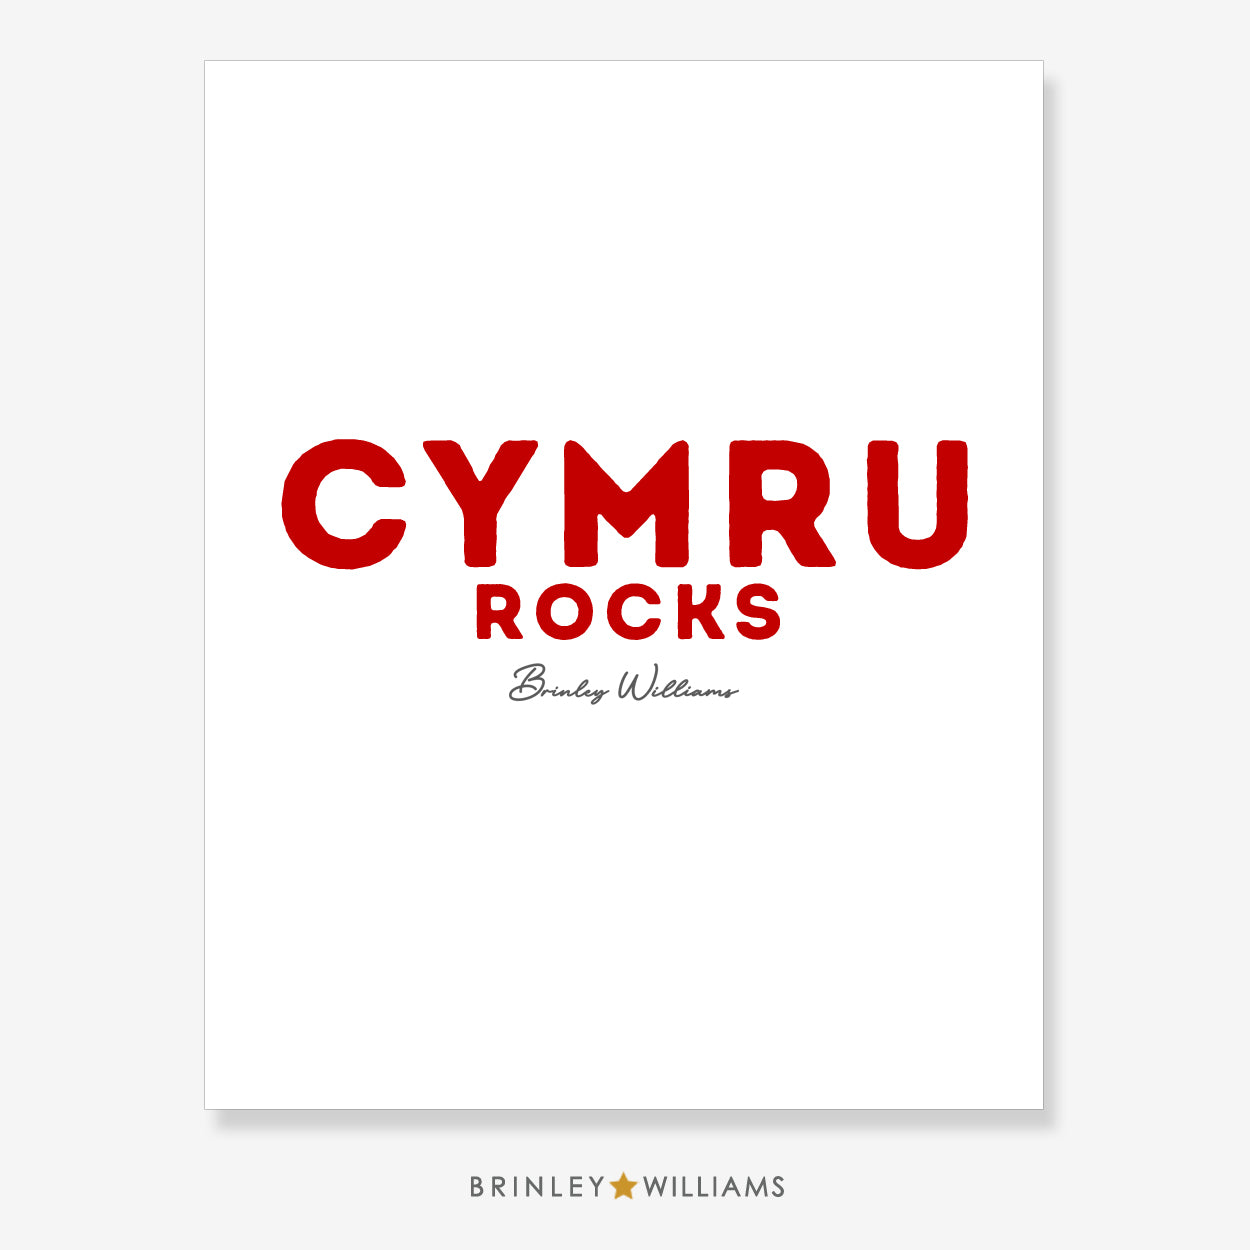 Cymru Rocks Wall Art Poster - Red